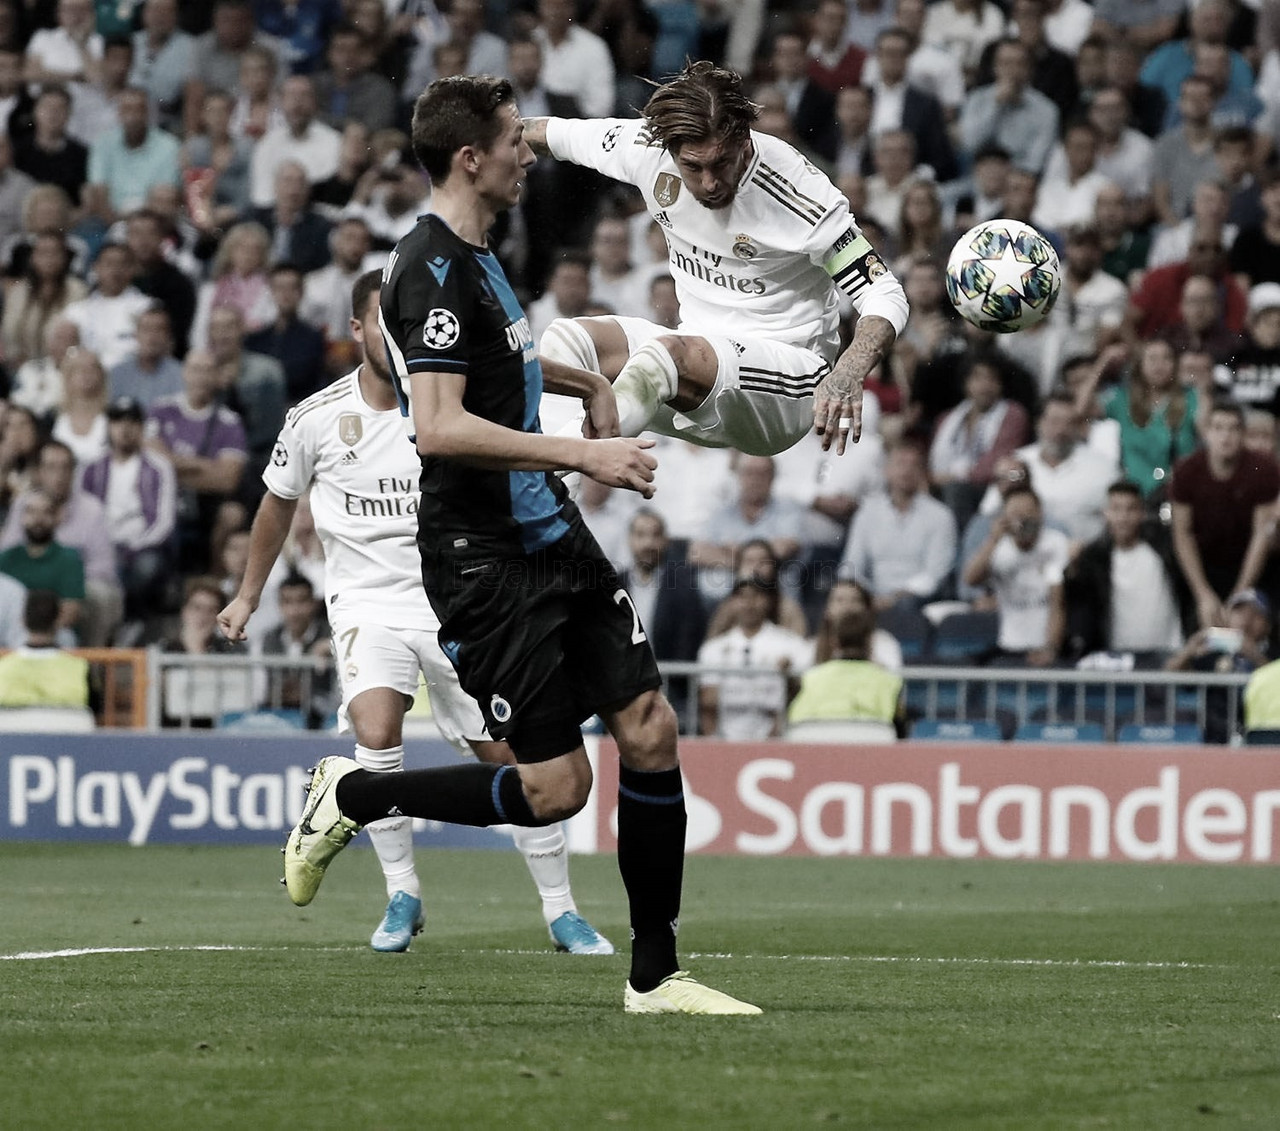 Real Madrid – Brujas: puntuaciones del
Real Madrid, jornada 2 de la fase de grupos de la Champions League 2019